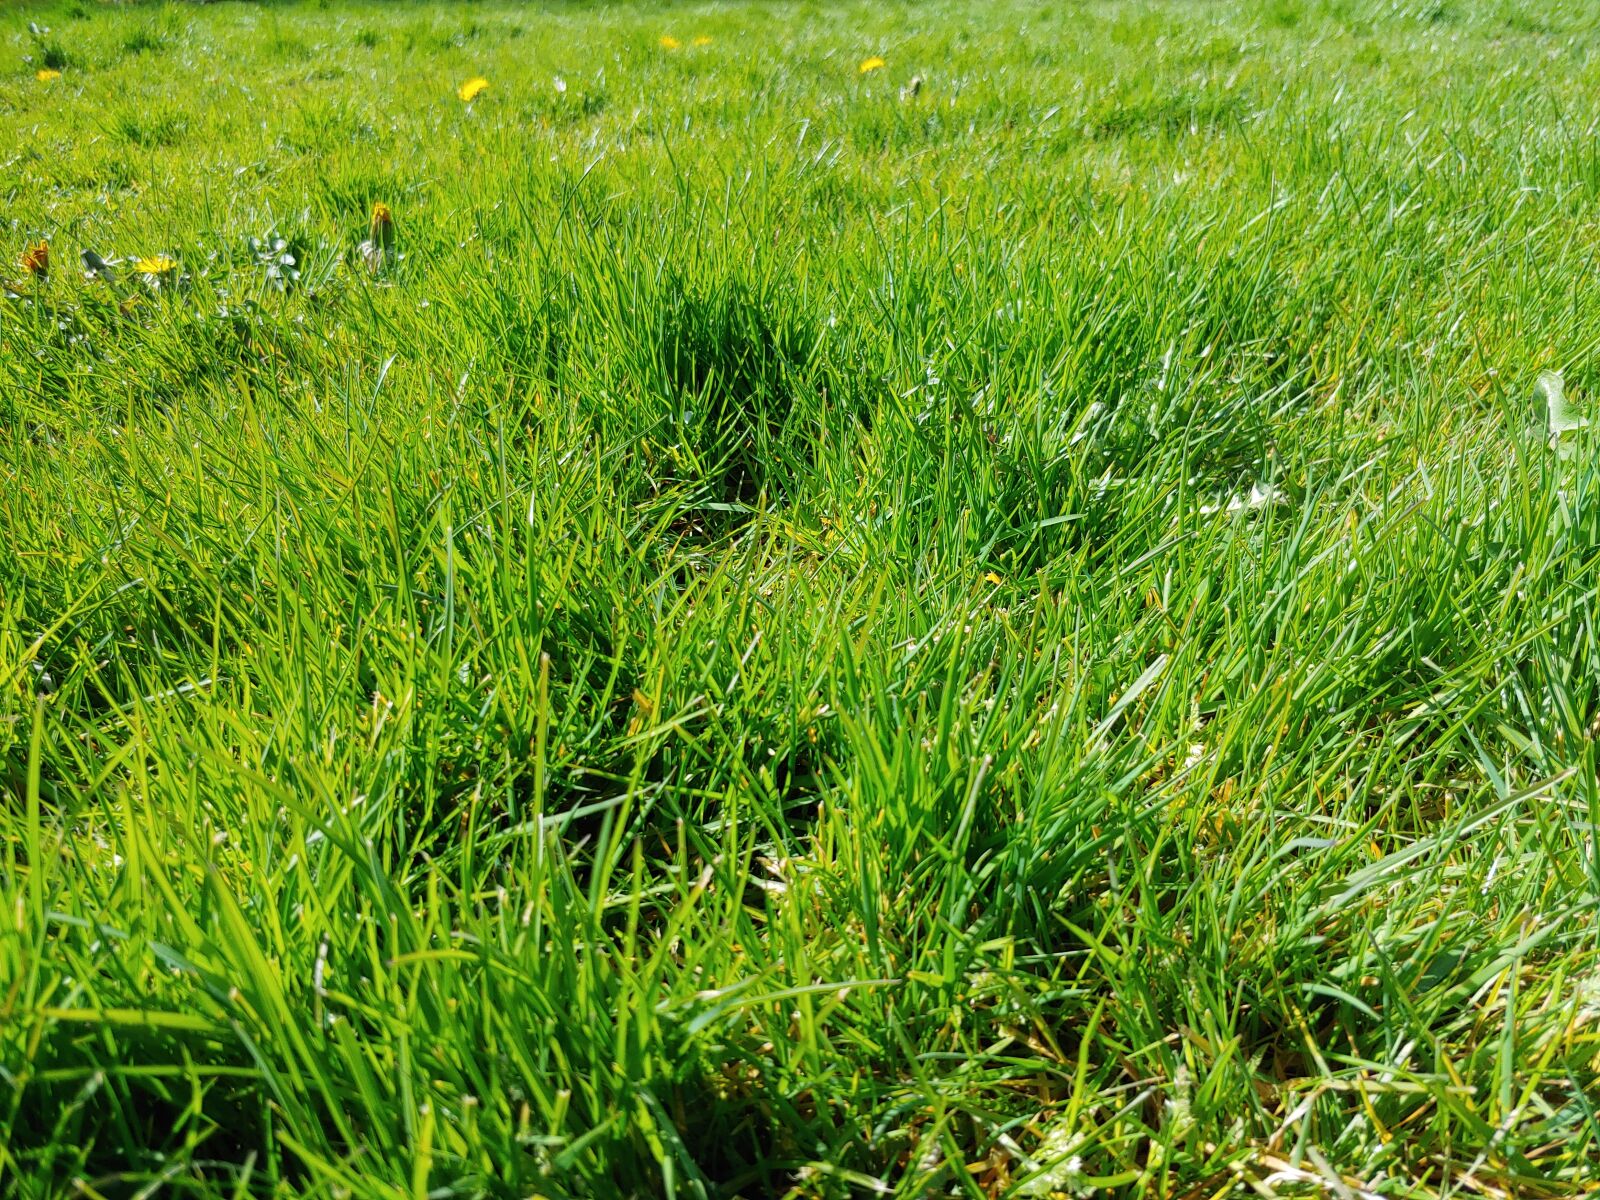 LG G7 THINQ sample photo. Grass, green, nature photography